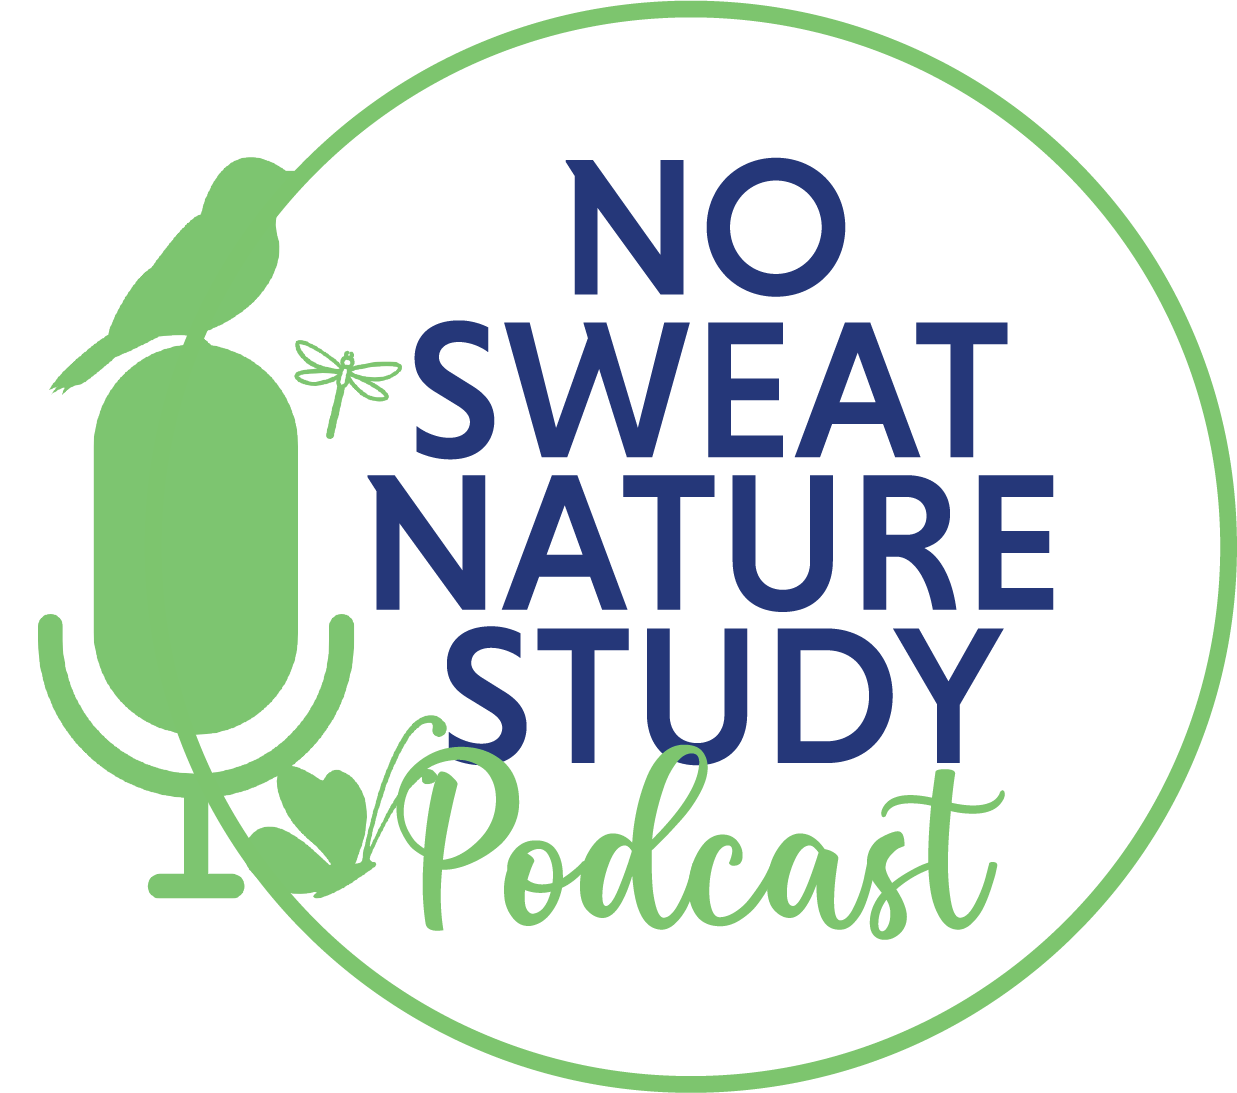 No Sweat Nature Study Podcast